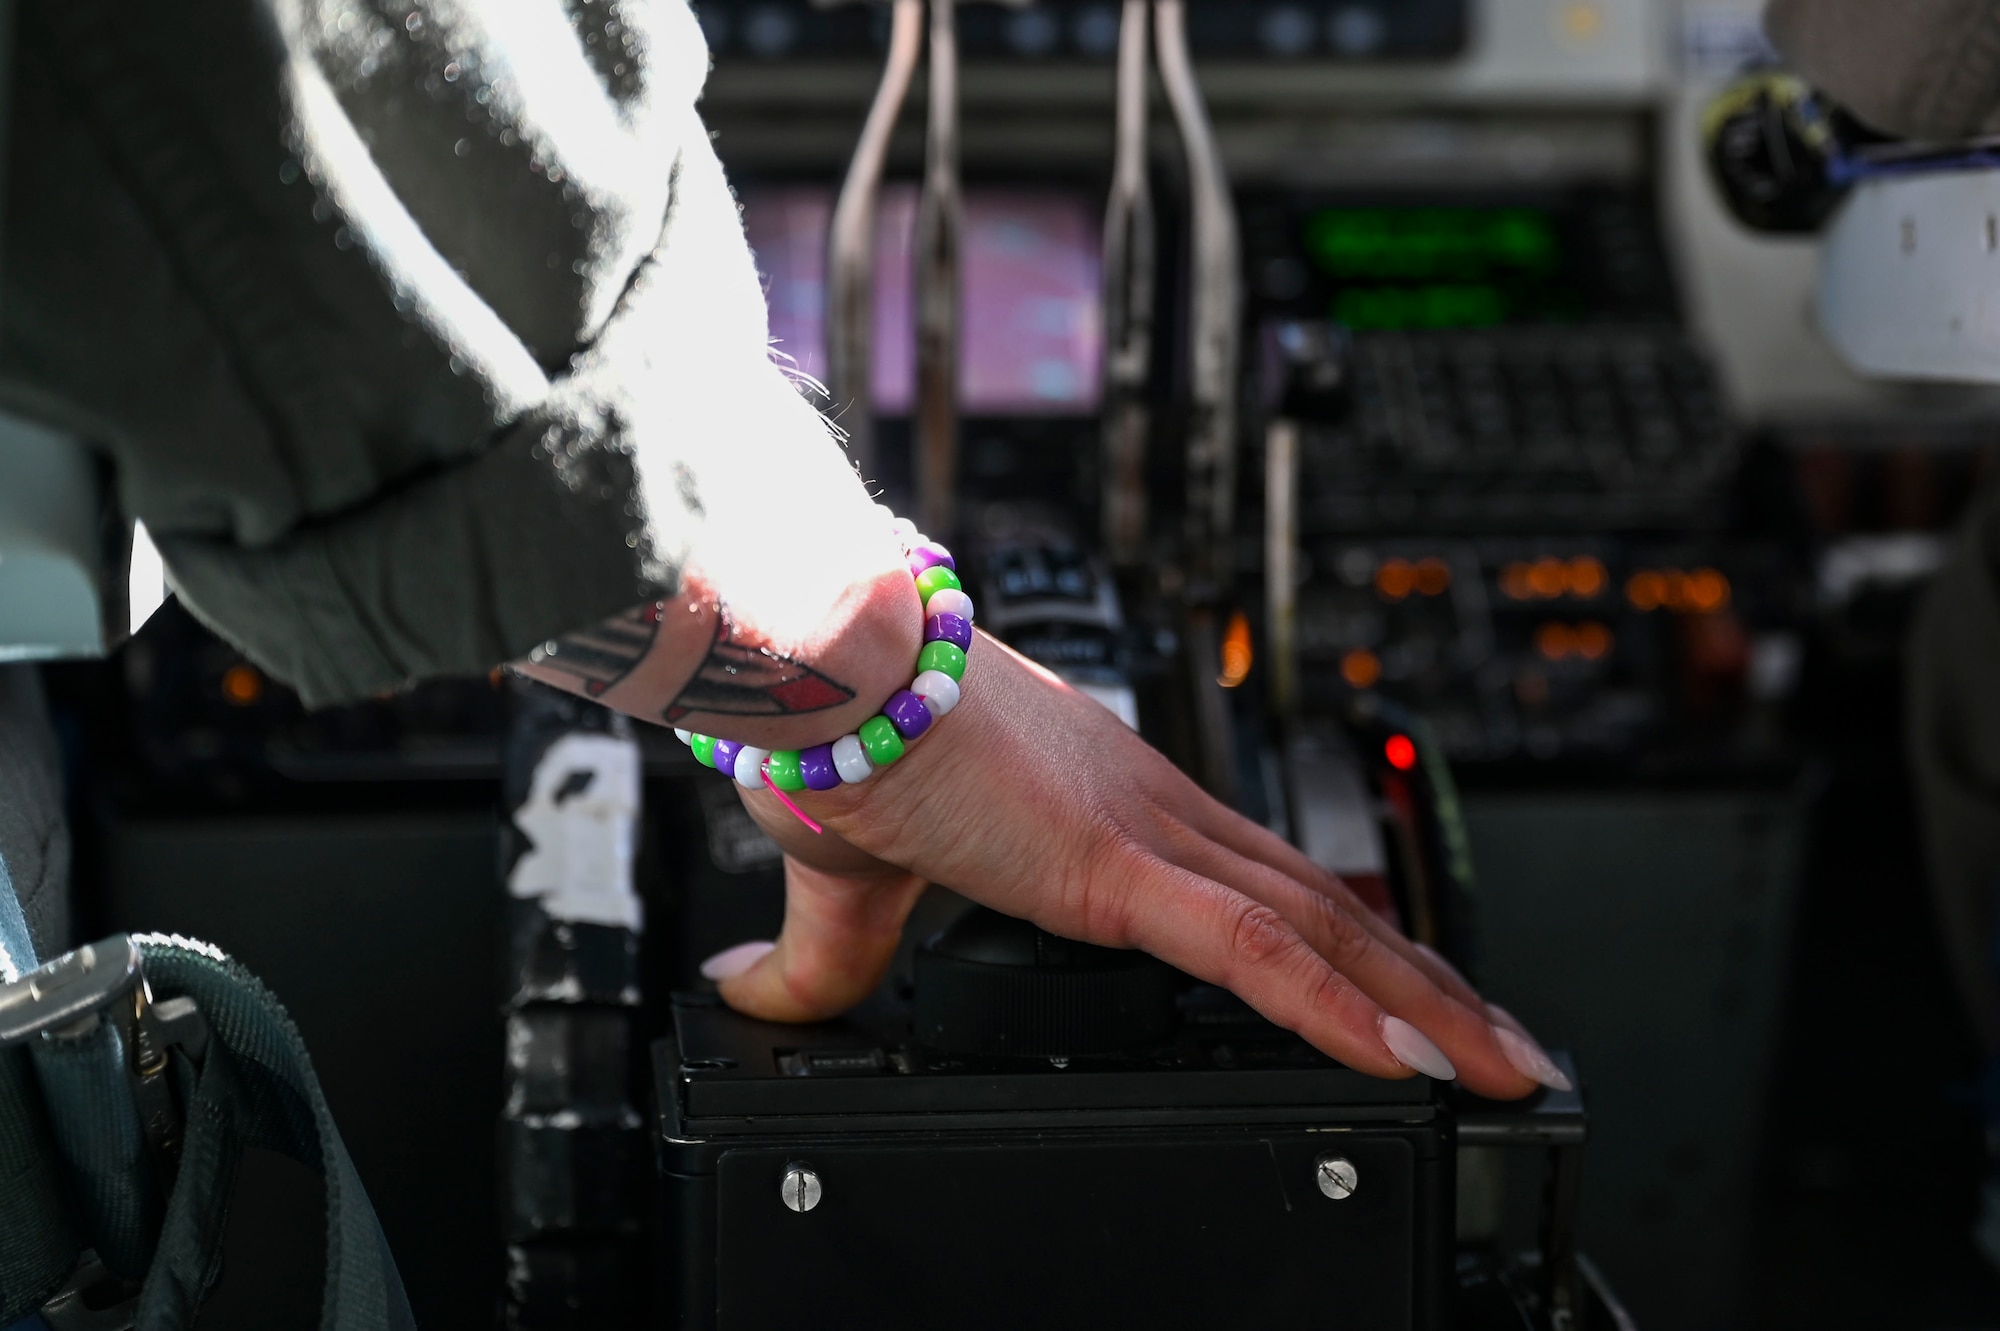 Airman's hand on flying equipment